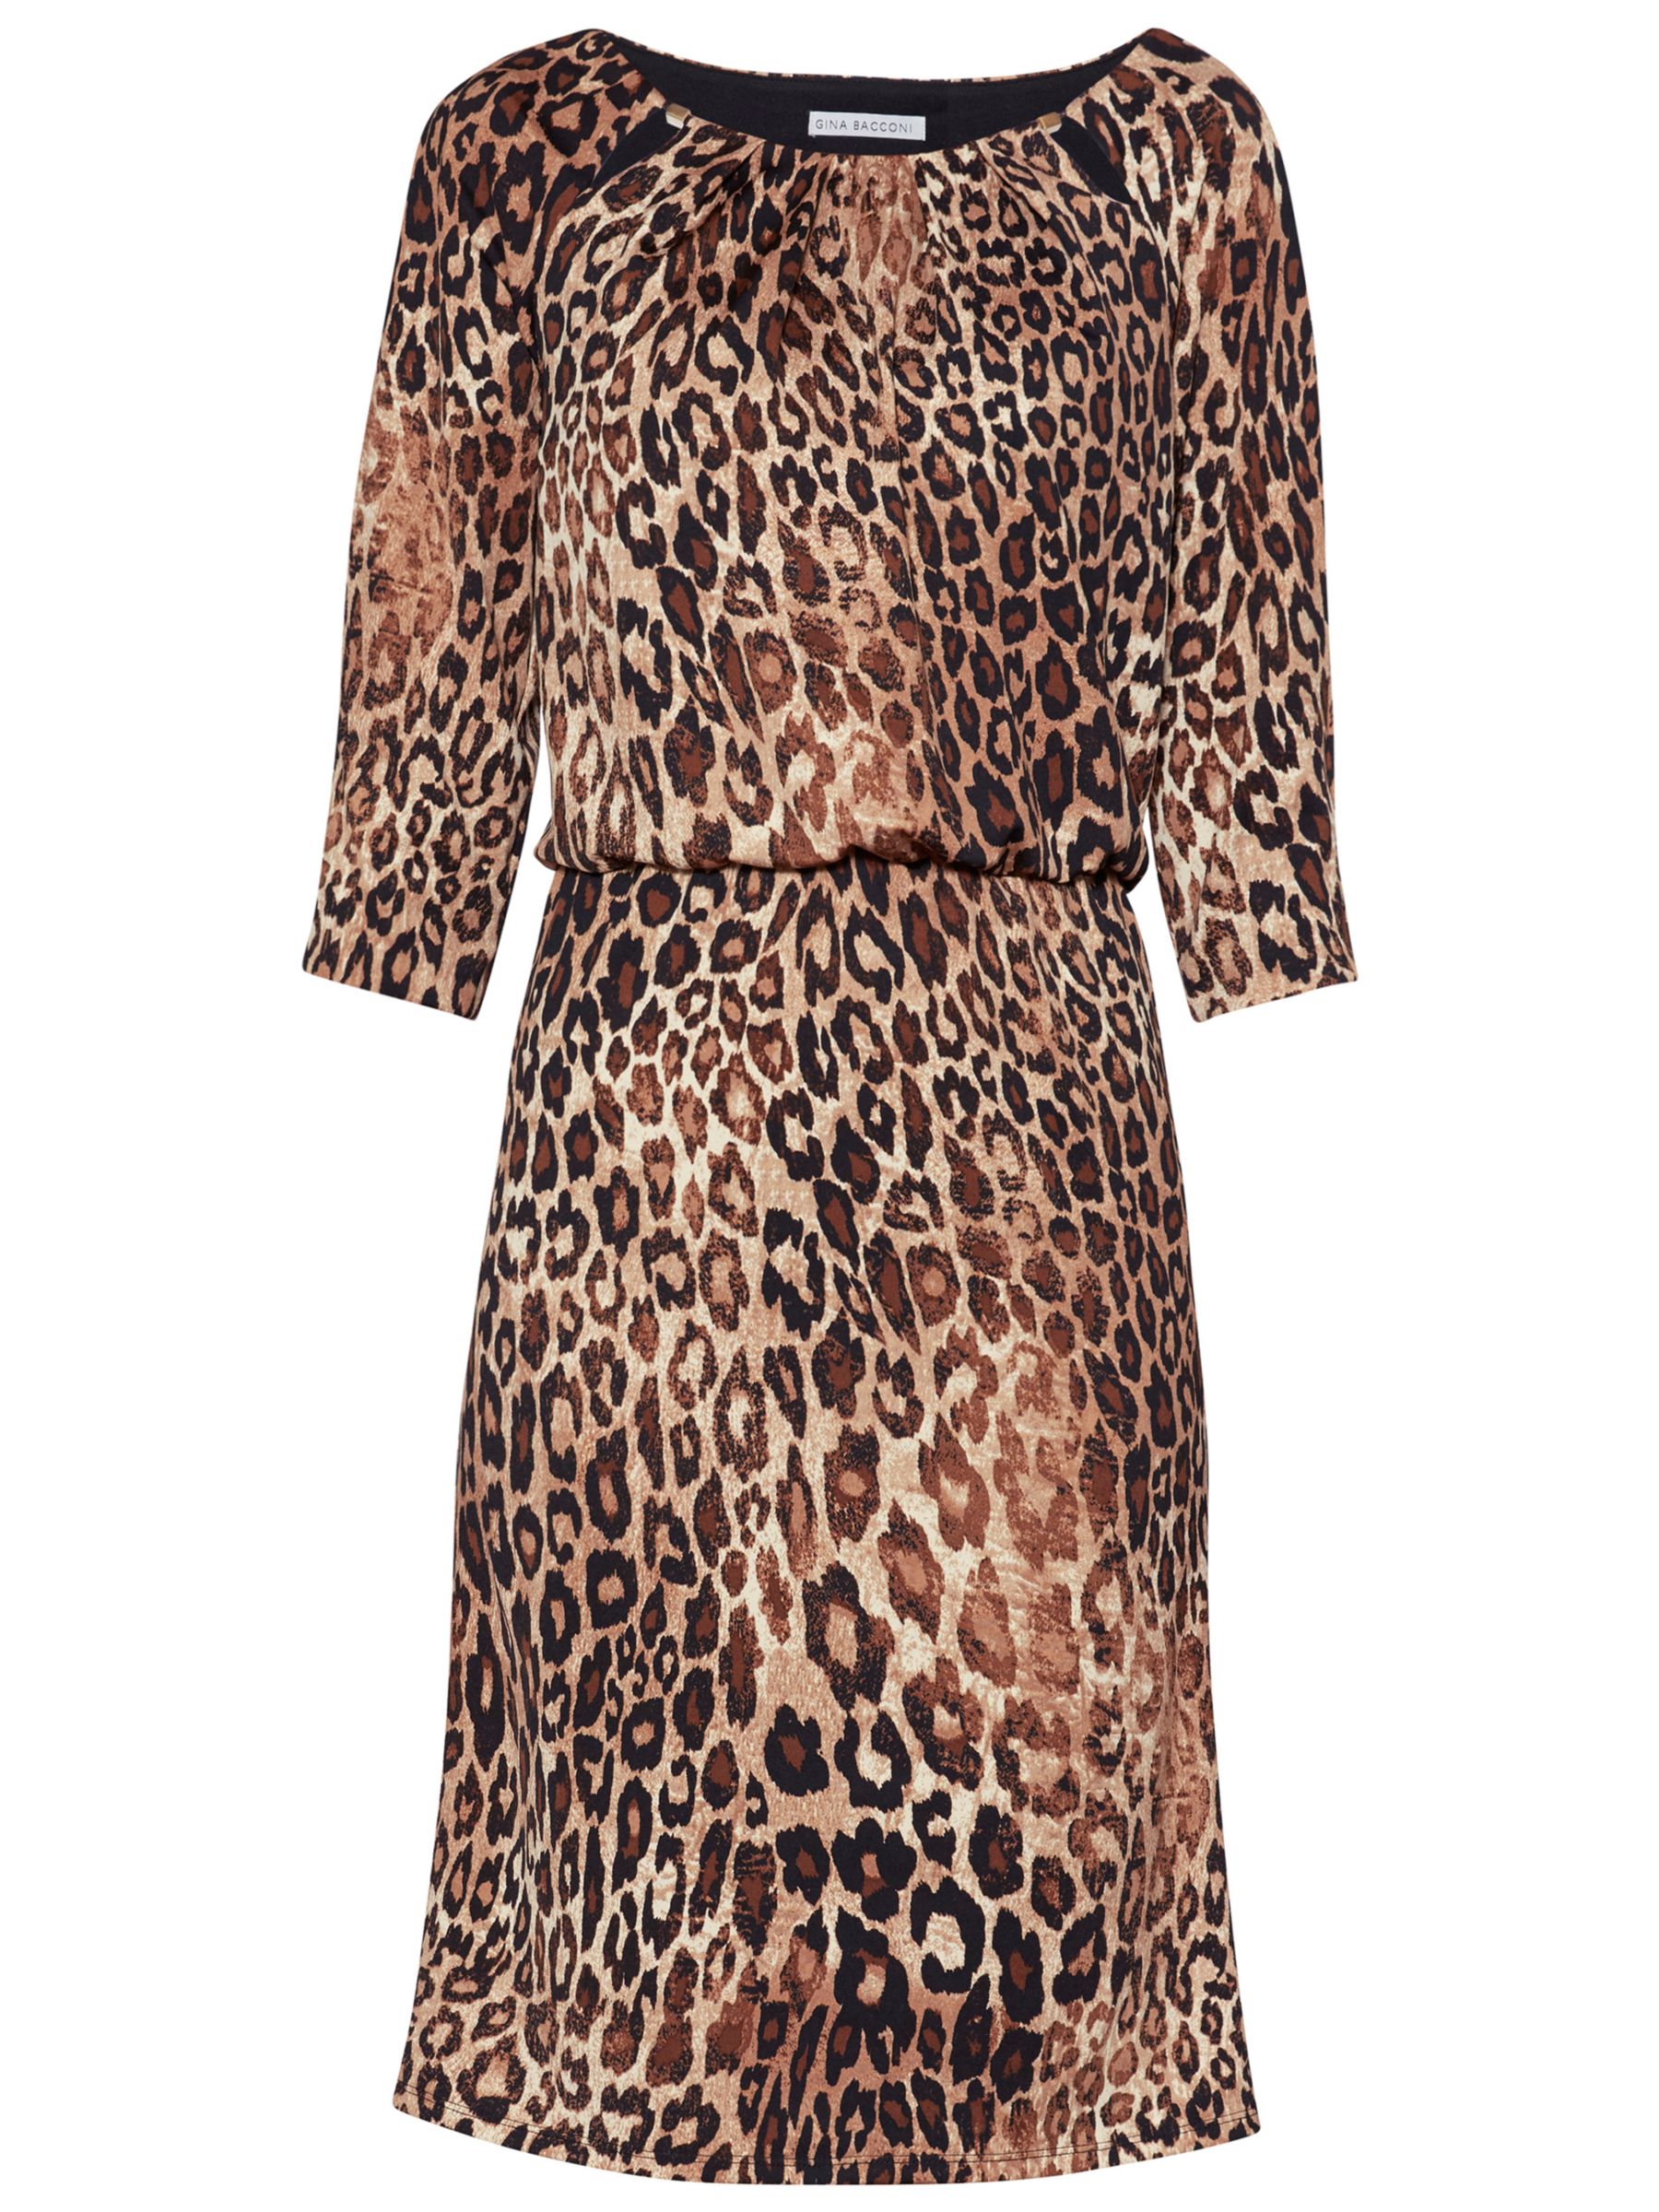 Gina Bacconi Ines Leopard Print Dress, Brown/Black